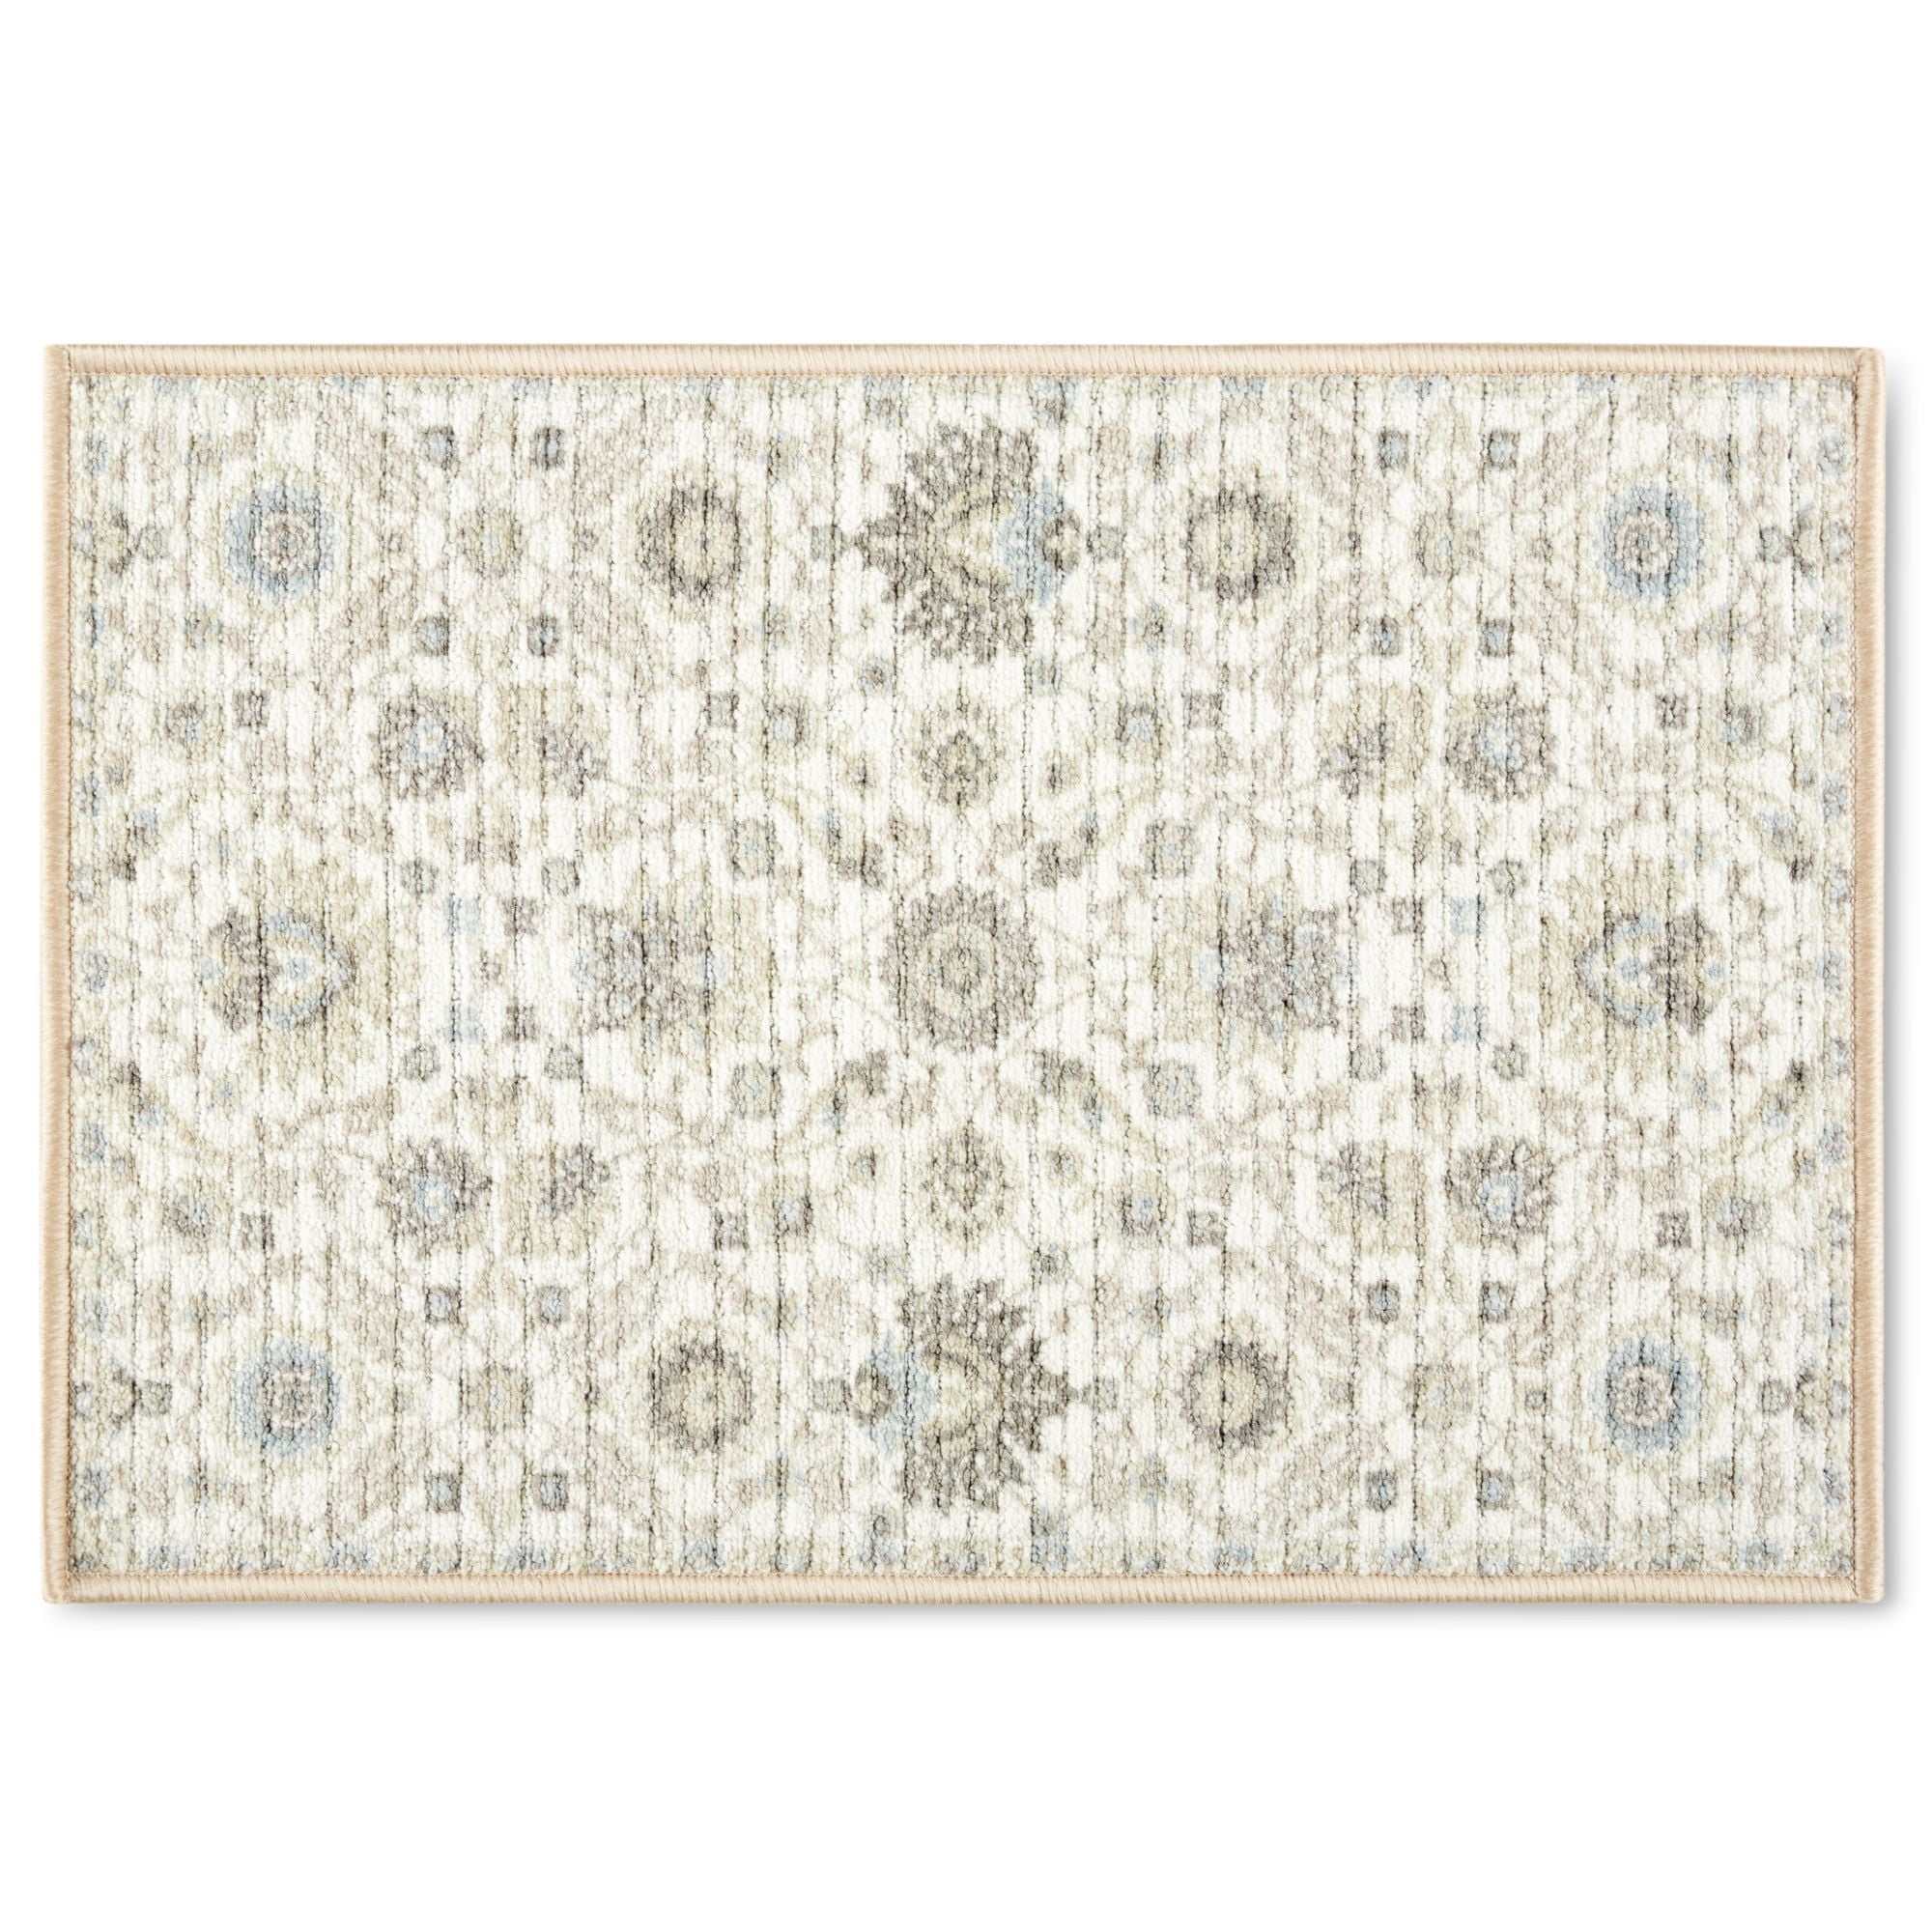 Mainstays Morocco Medallion Fabric Mat, 18"x27", Ivory